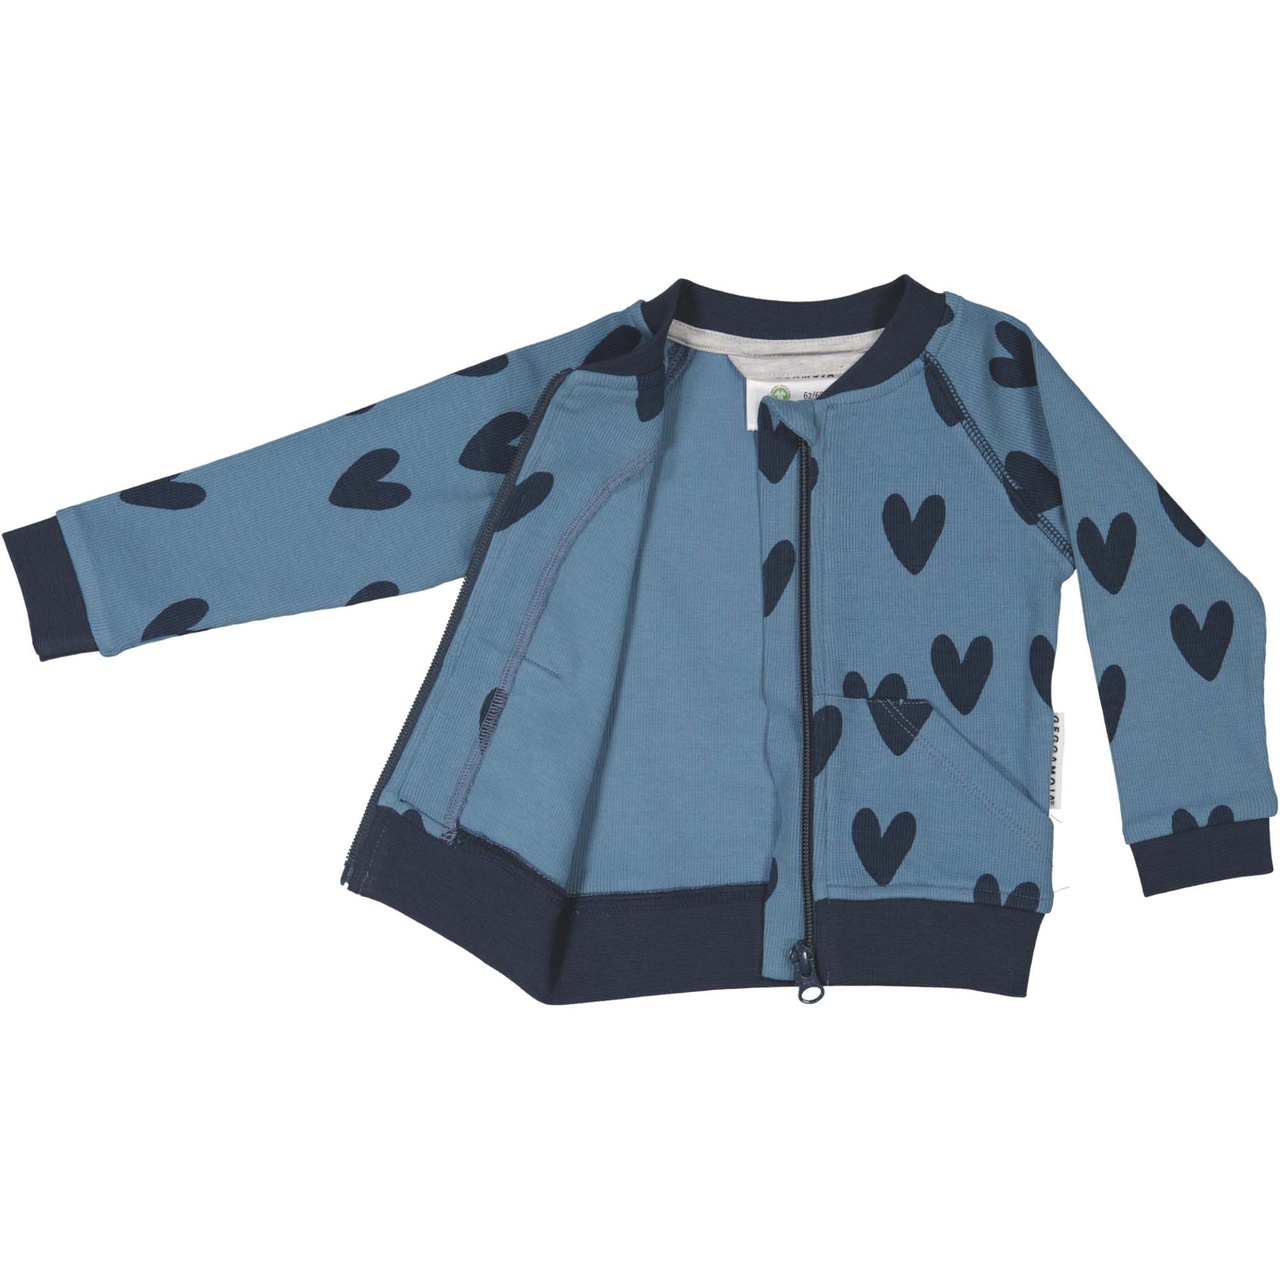 Zip jacket Blue heart 98/104